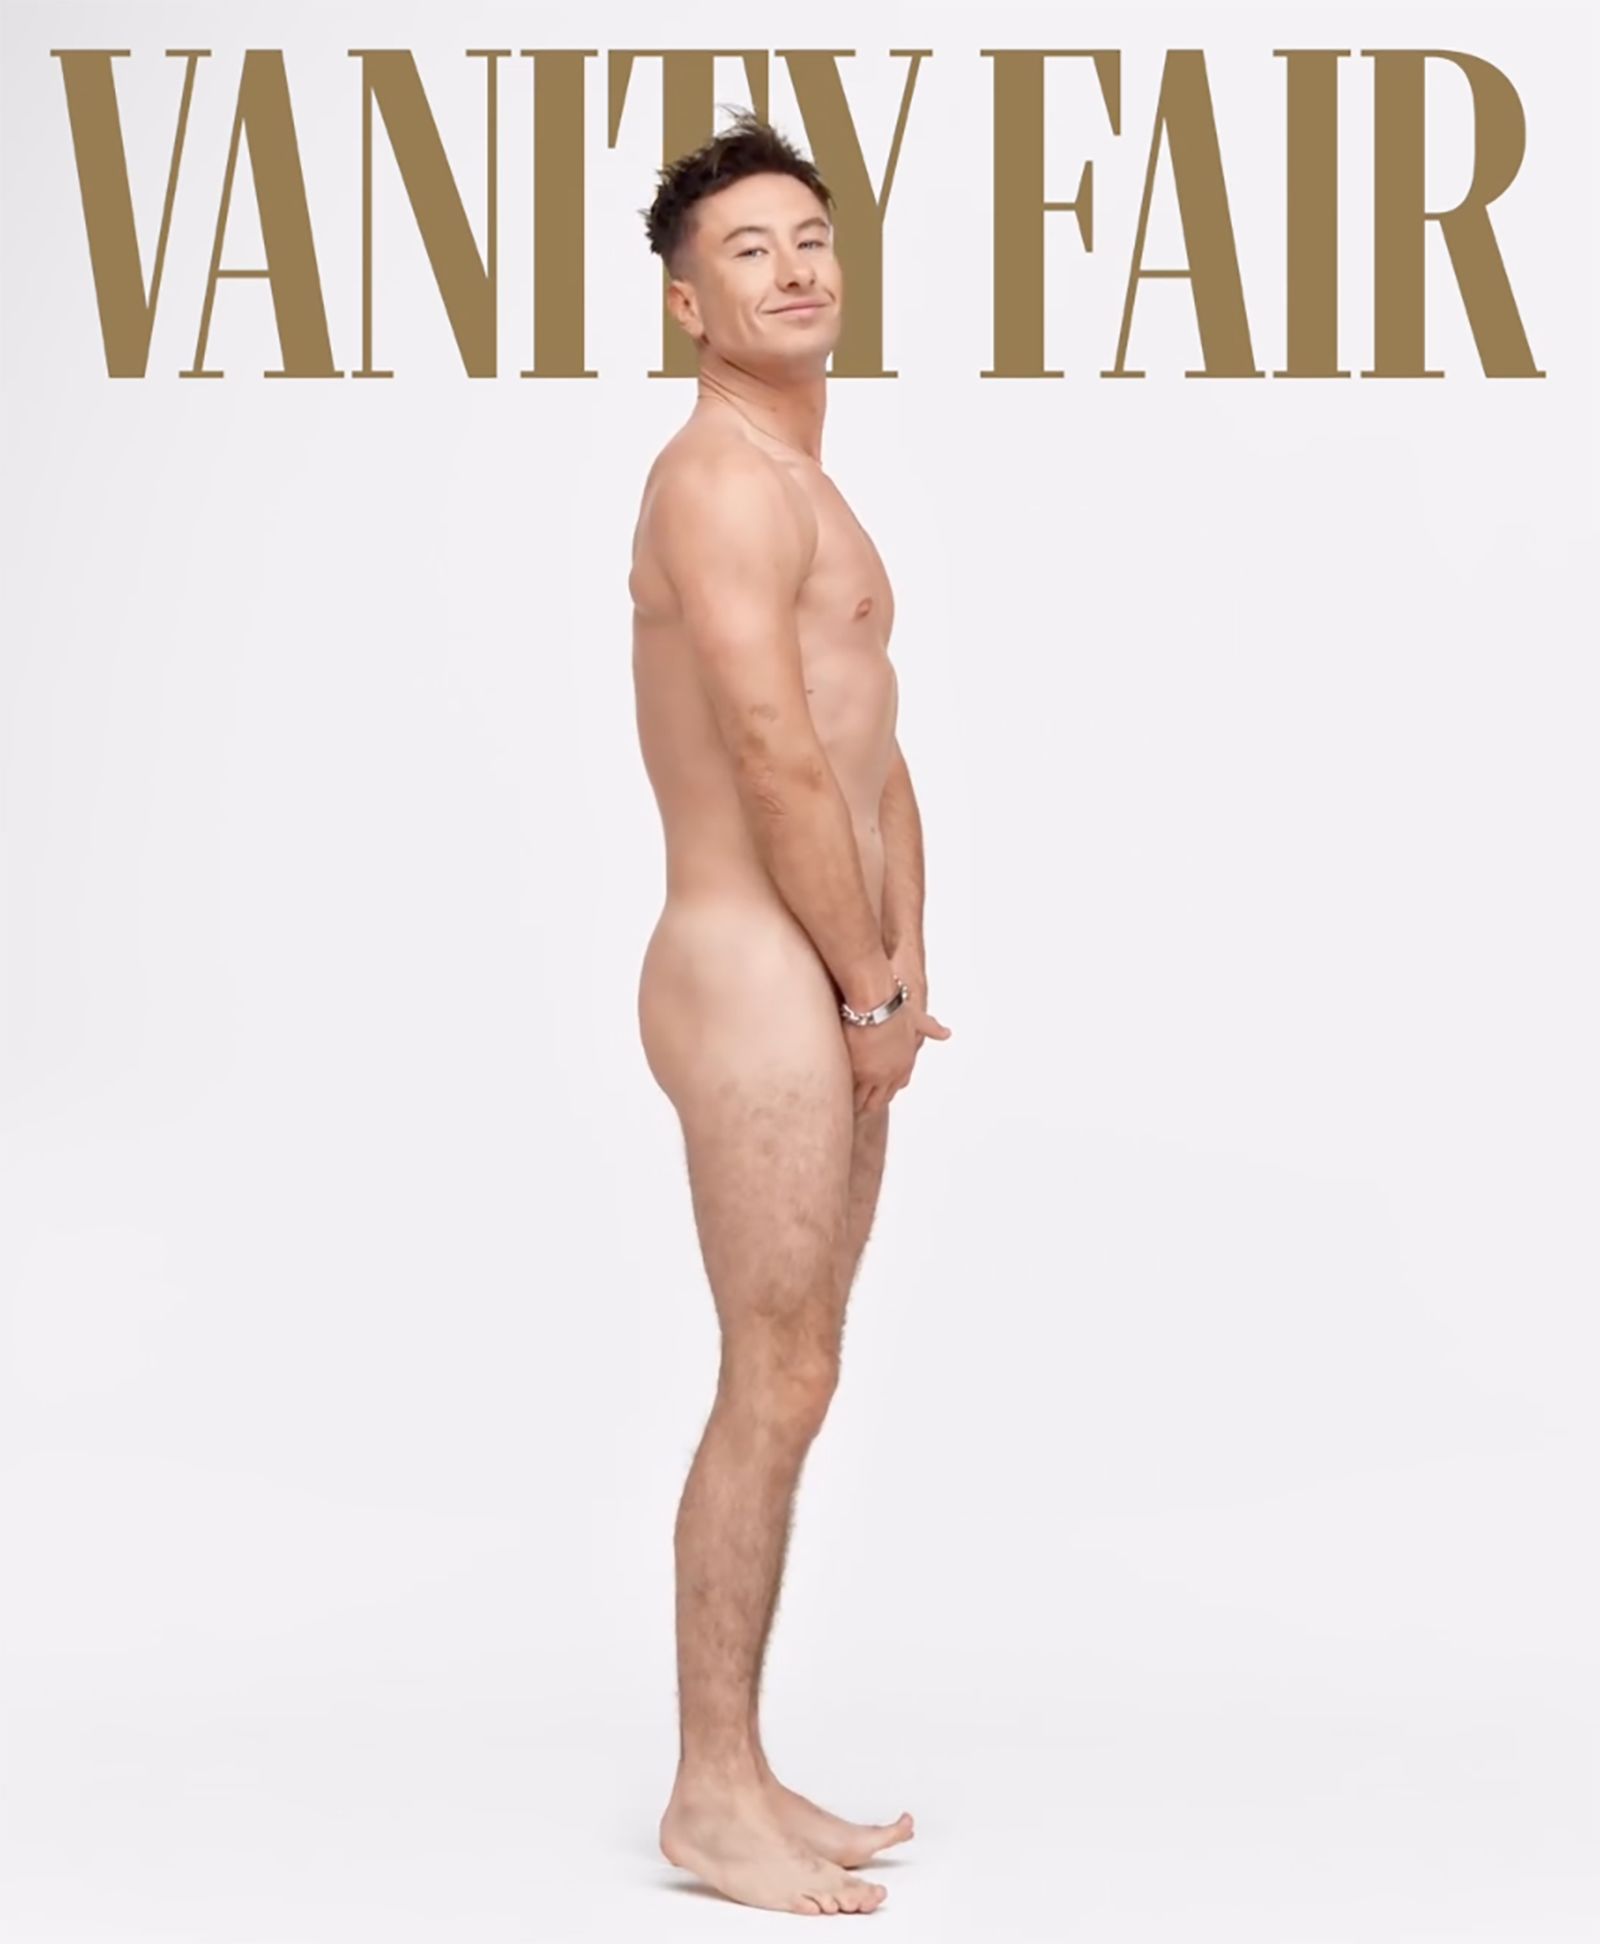 Barry Keoghan appears naked on 'Vanity Fair' cover. Is it